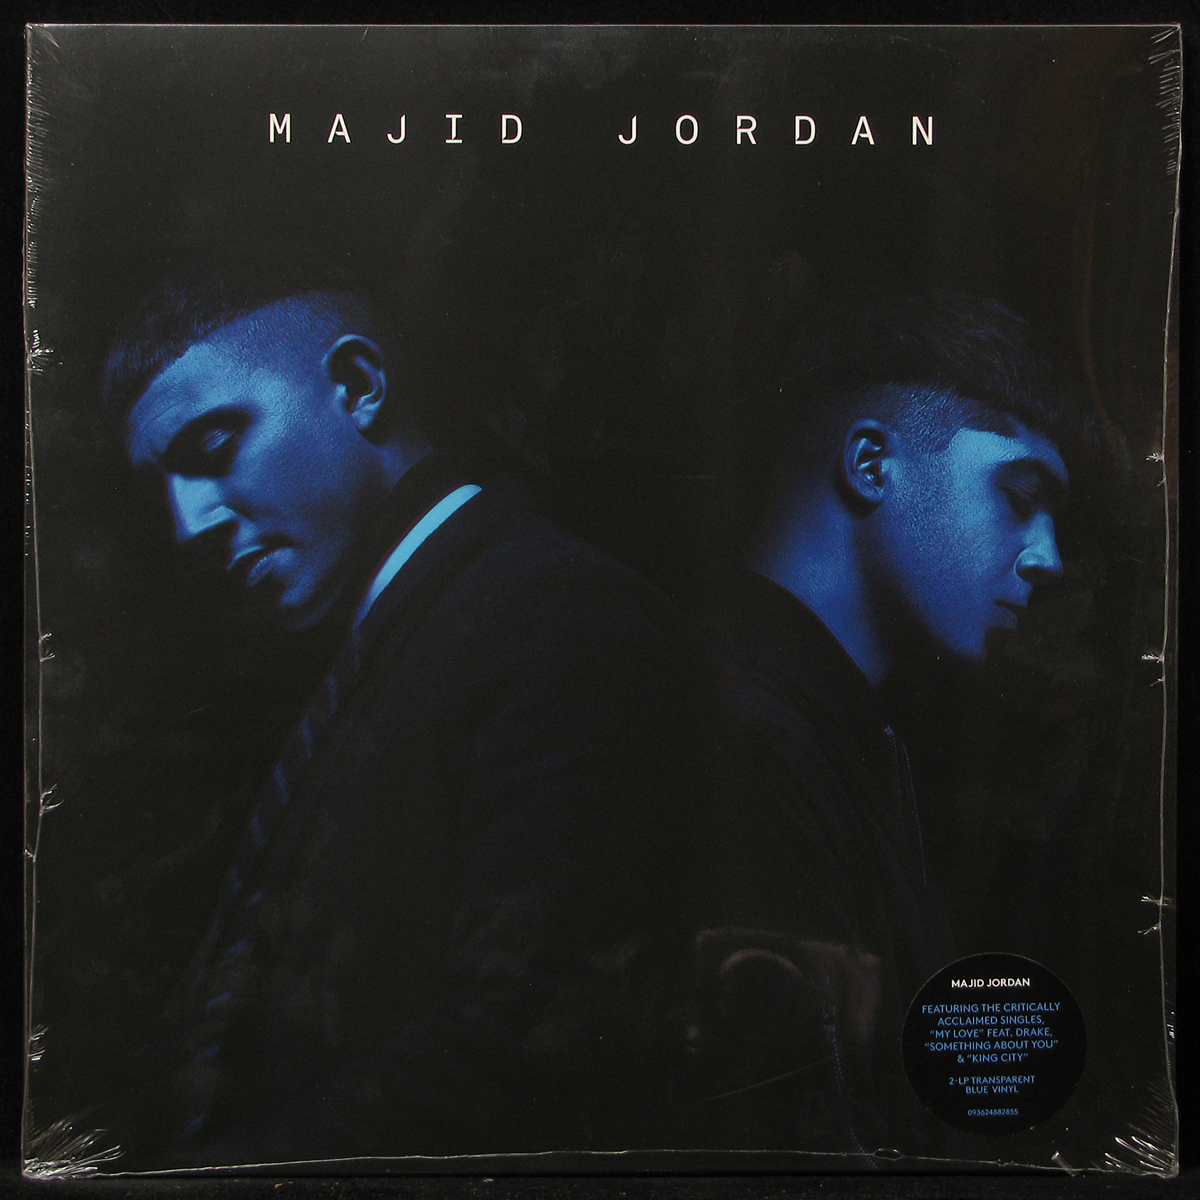 LP Majid Jordan — Majid Jordan (2LP, coloured vinyl) фото